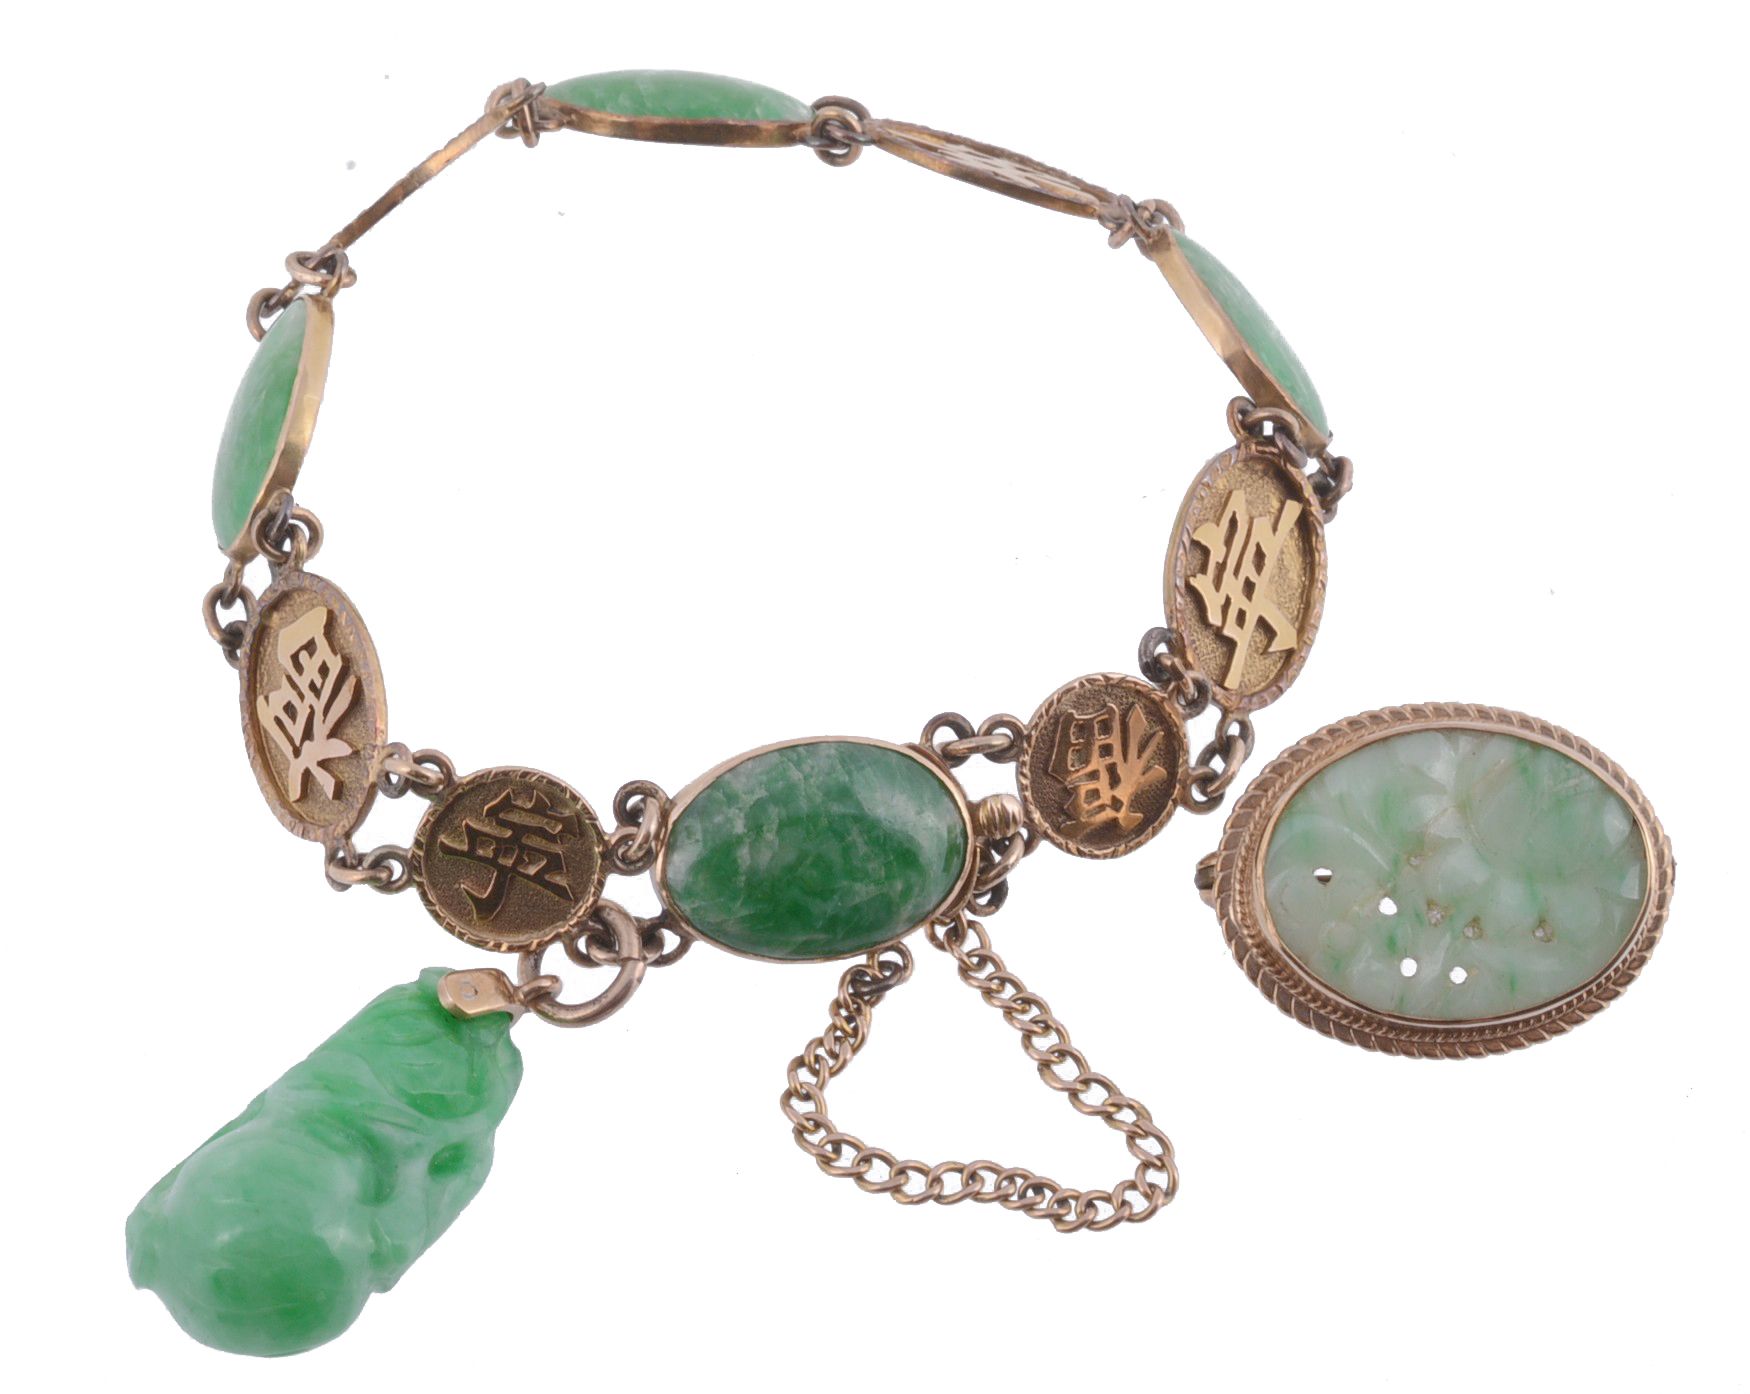 A jadeite bracelet, composed of oval links set with oval cabochon jadeite...  A jadeite